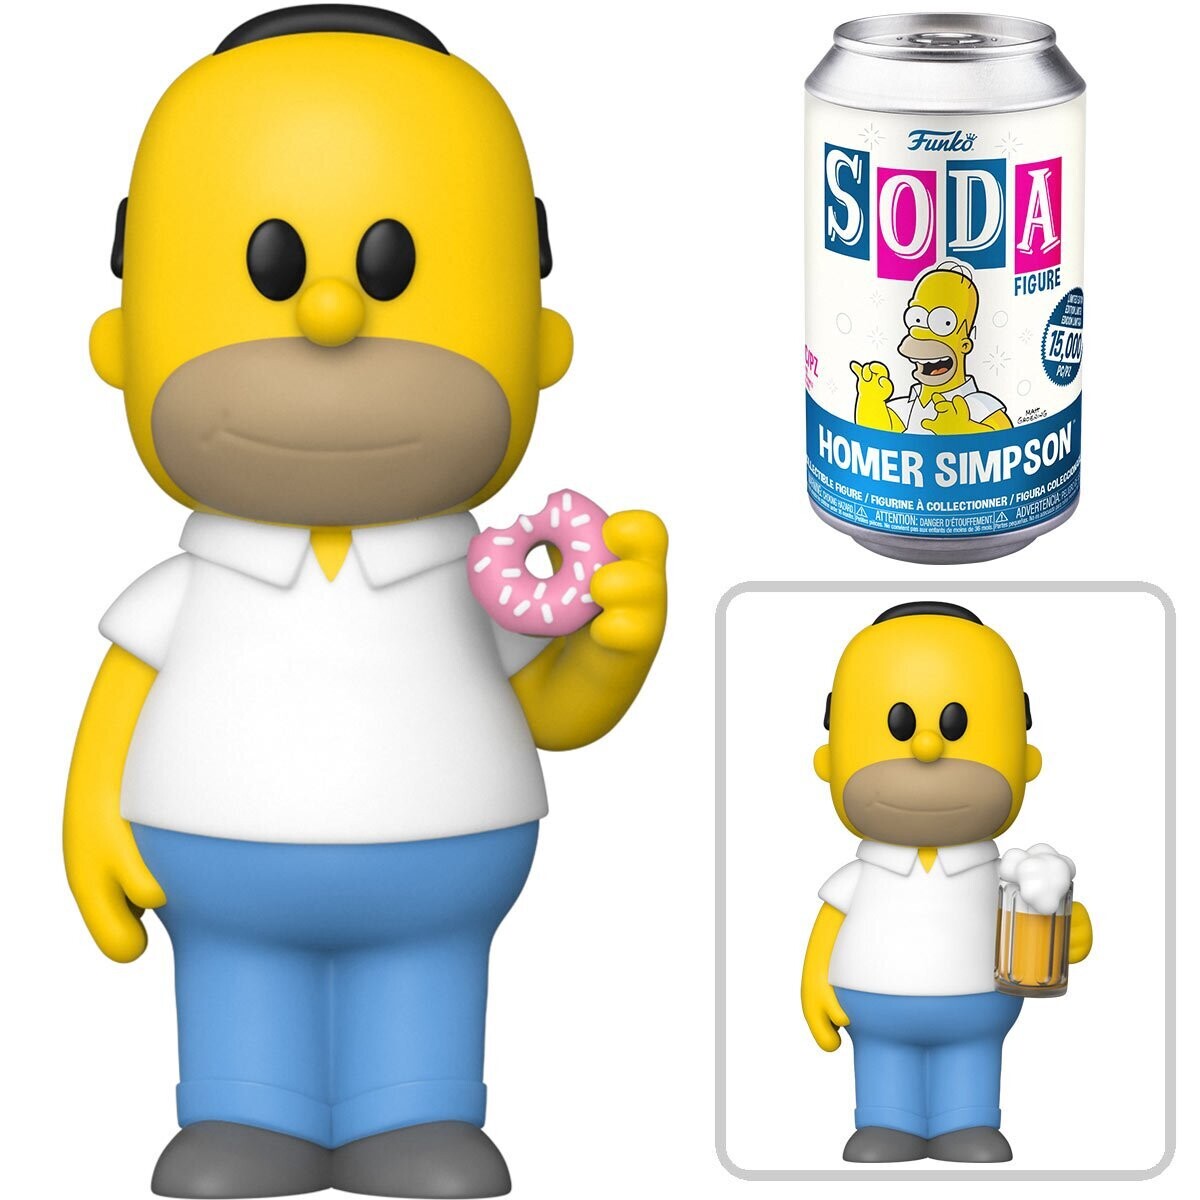 PRE-ORDER Funko The Simpsons Homer Simpson Vinyl Soda Figure